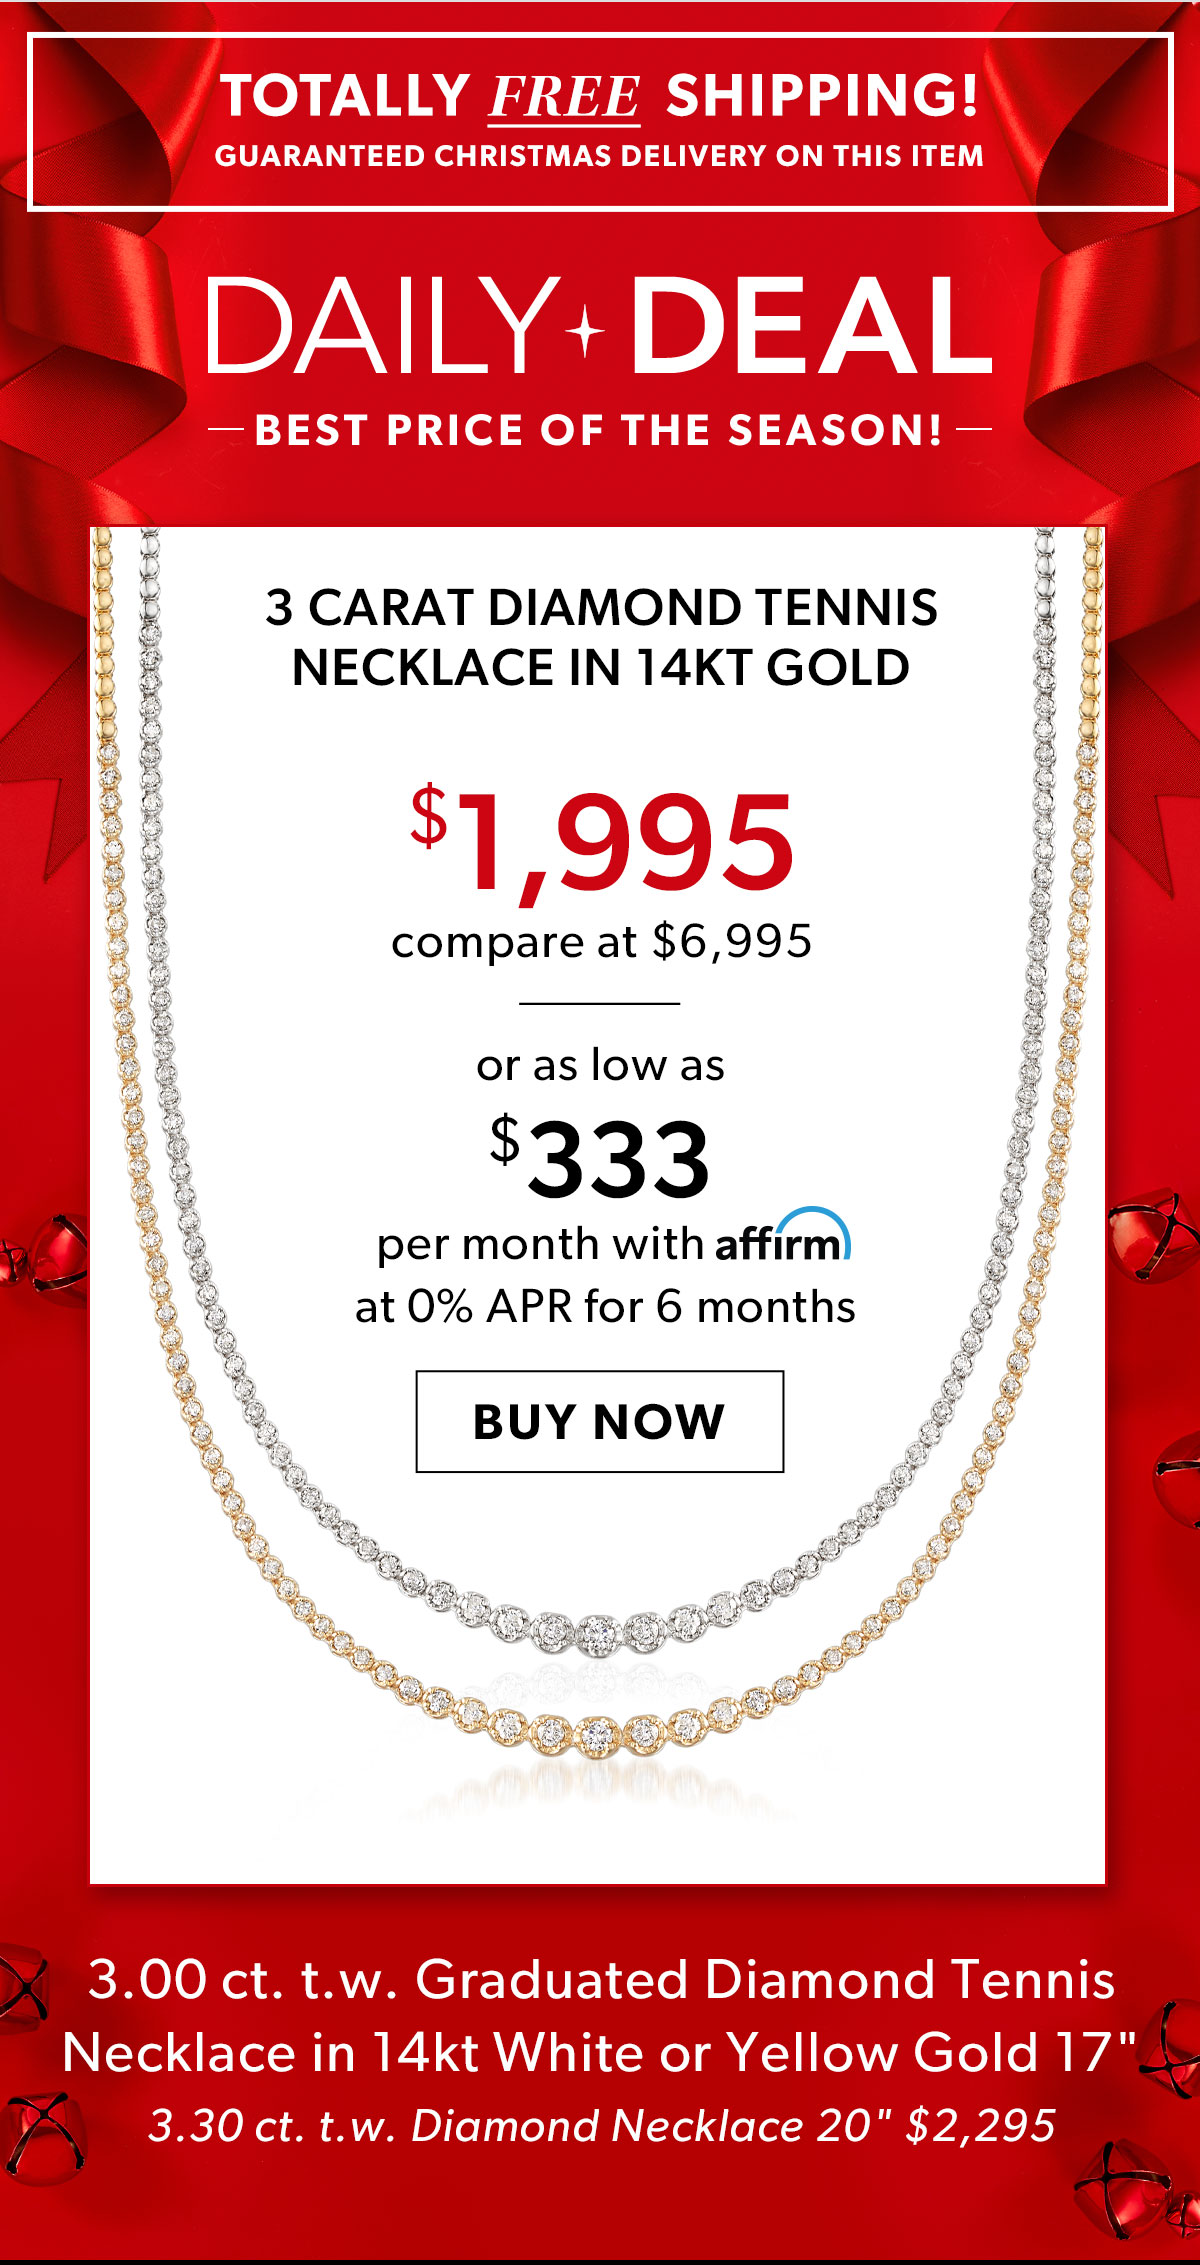 3 Carat Diamond Tennis Necklace in 14kt Gold. $1,995. Buy Now